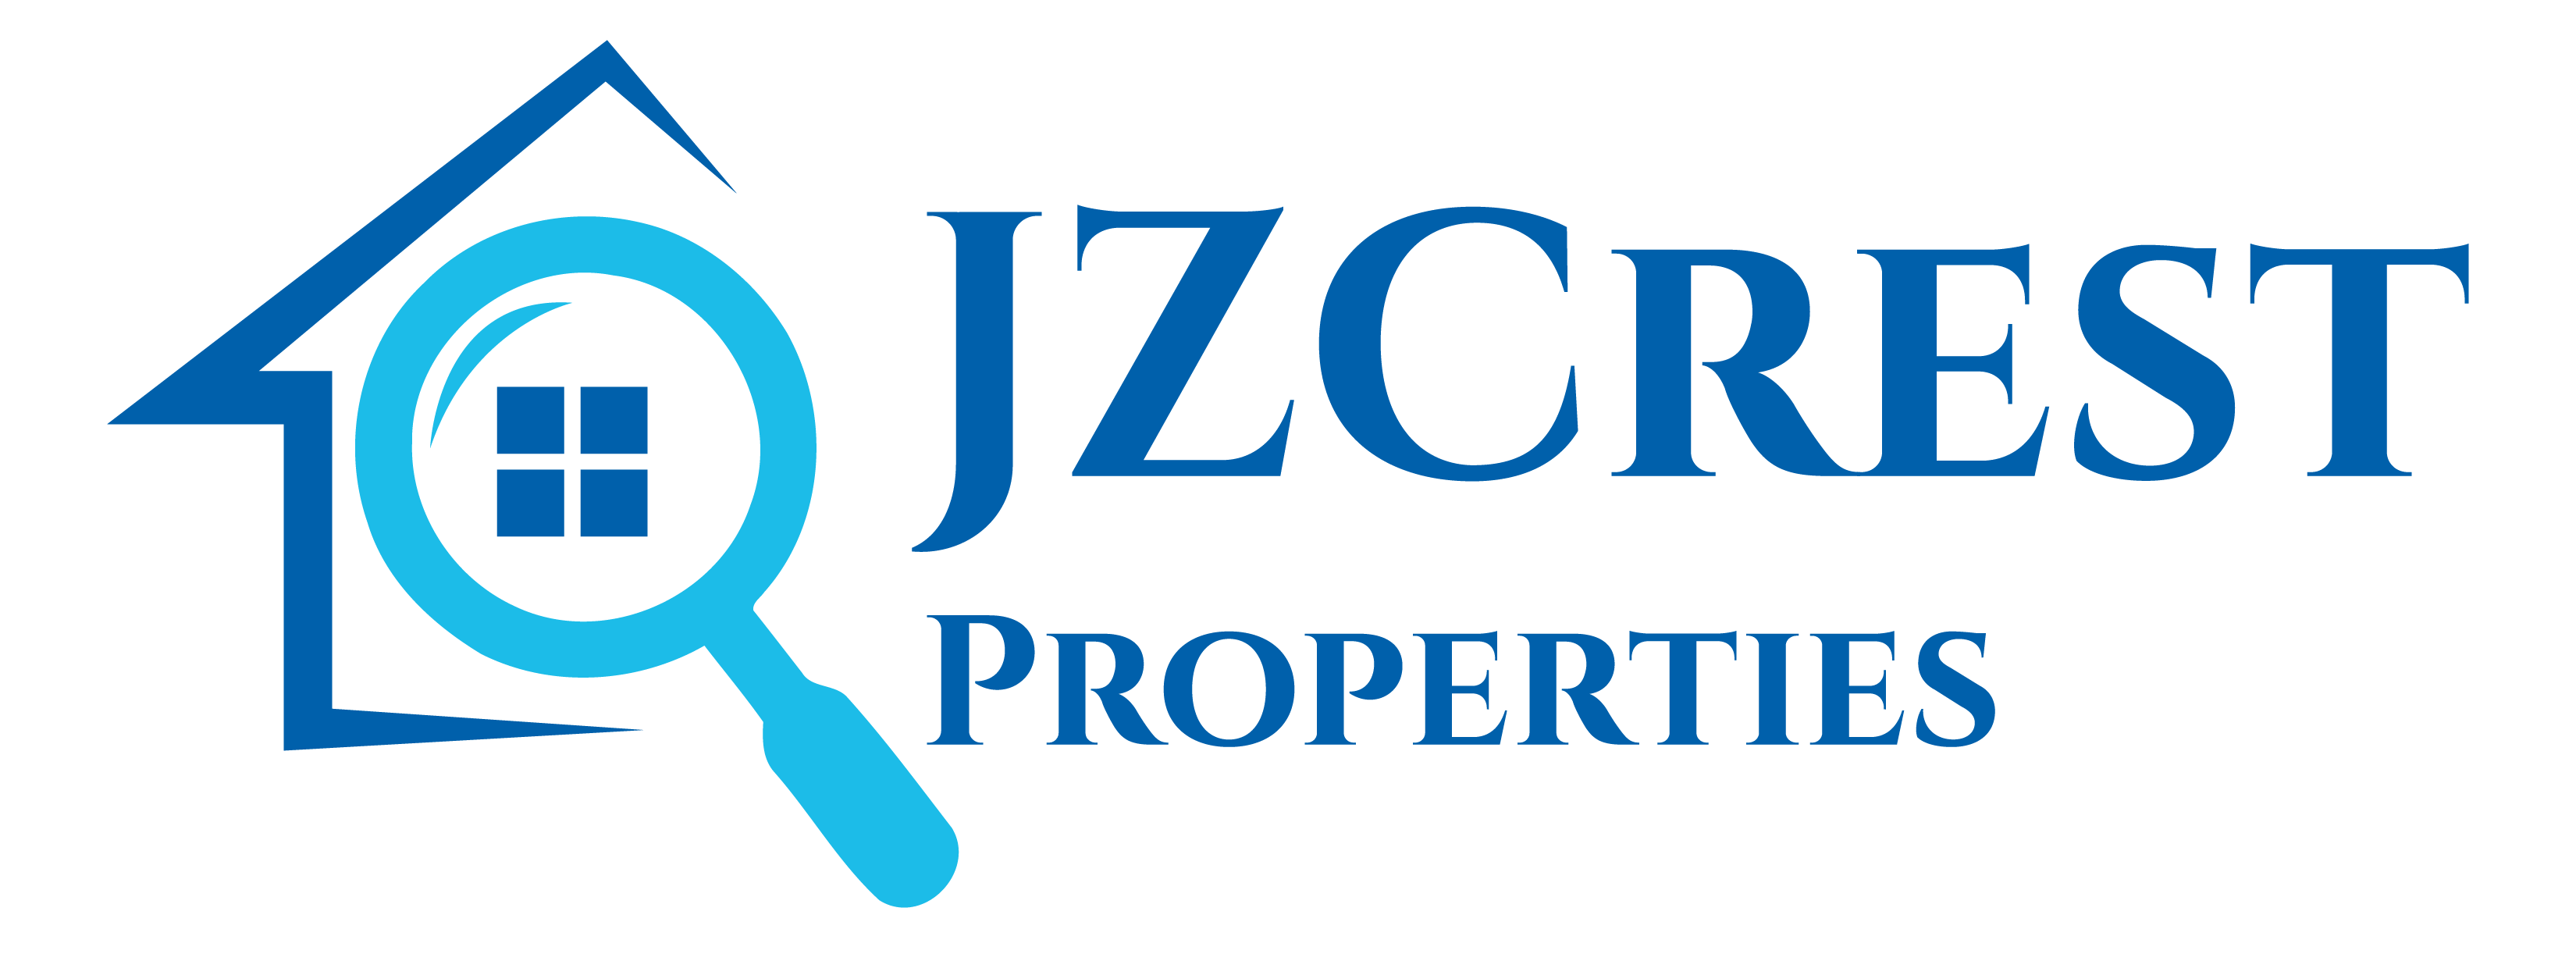 JZ Crest Properties